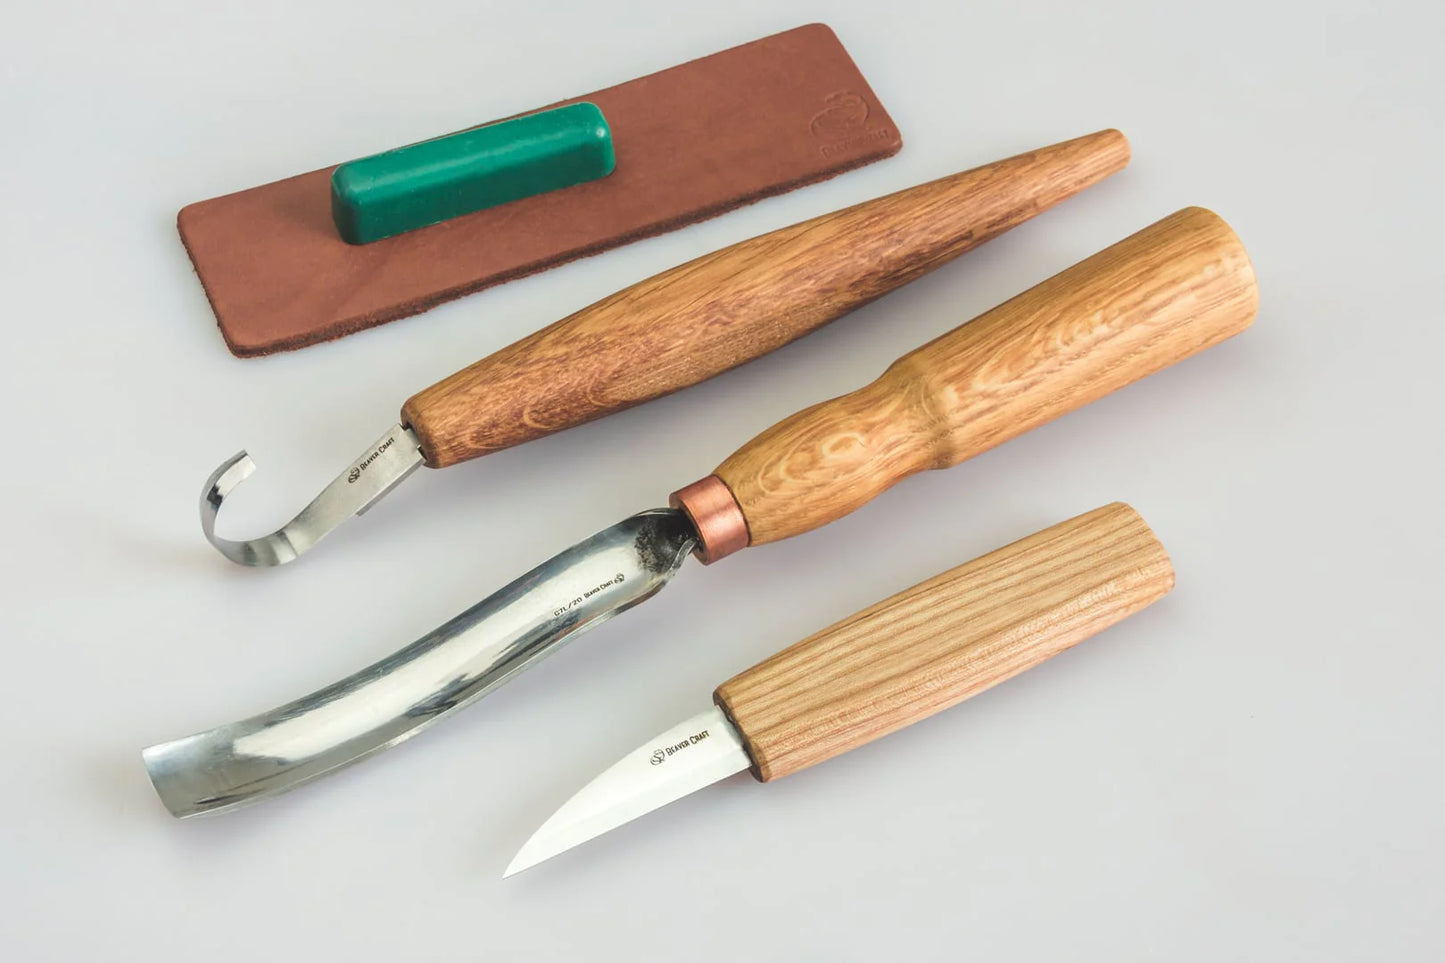 BeaverCraft S47 Spoon Carving Wood Carving Tool Set